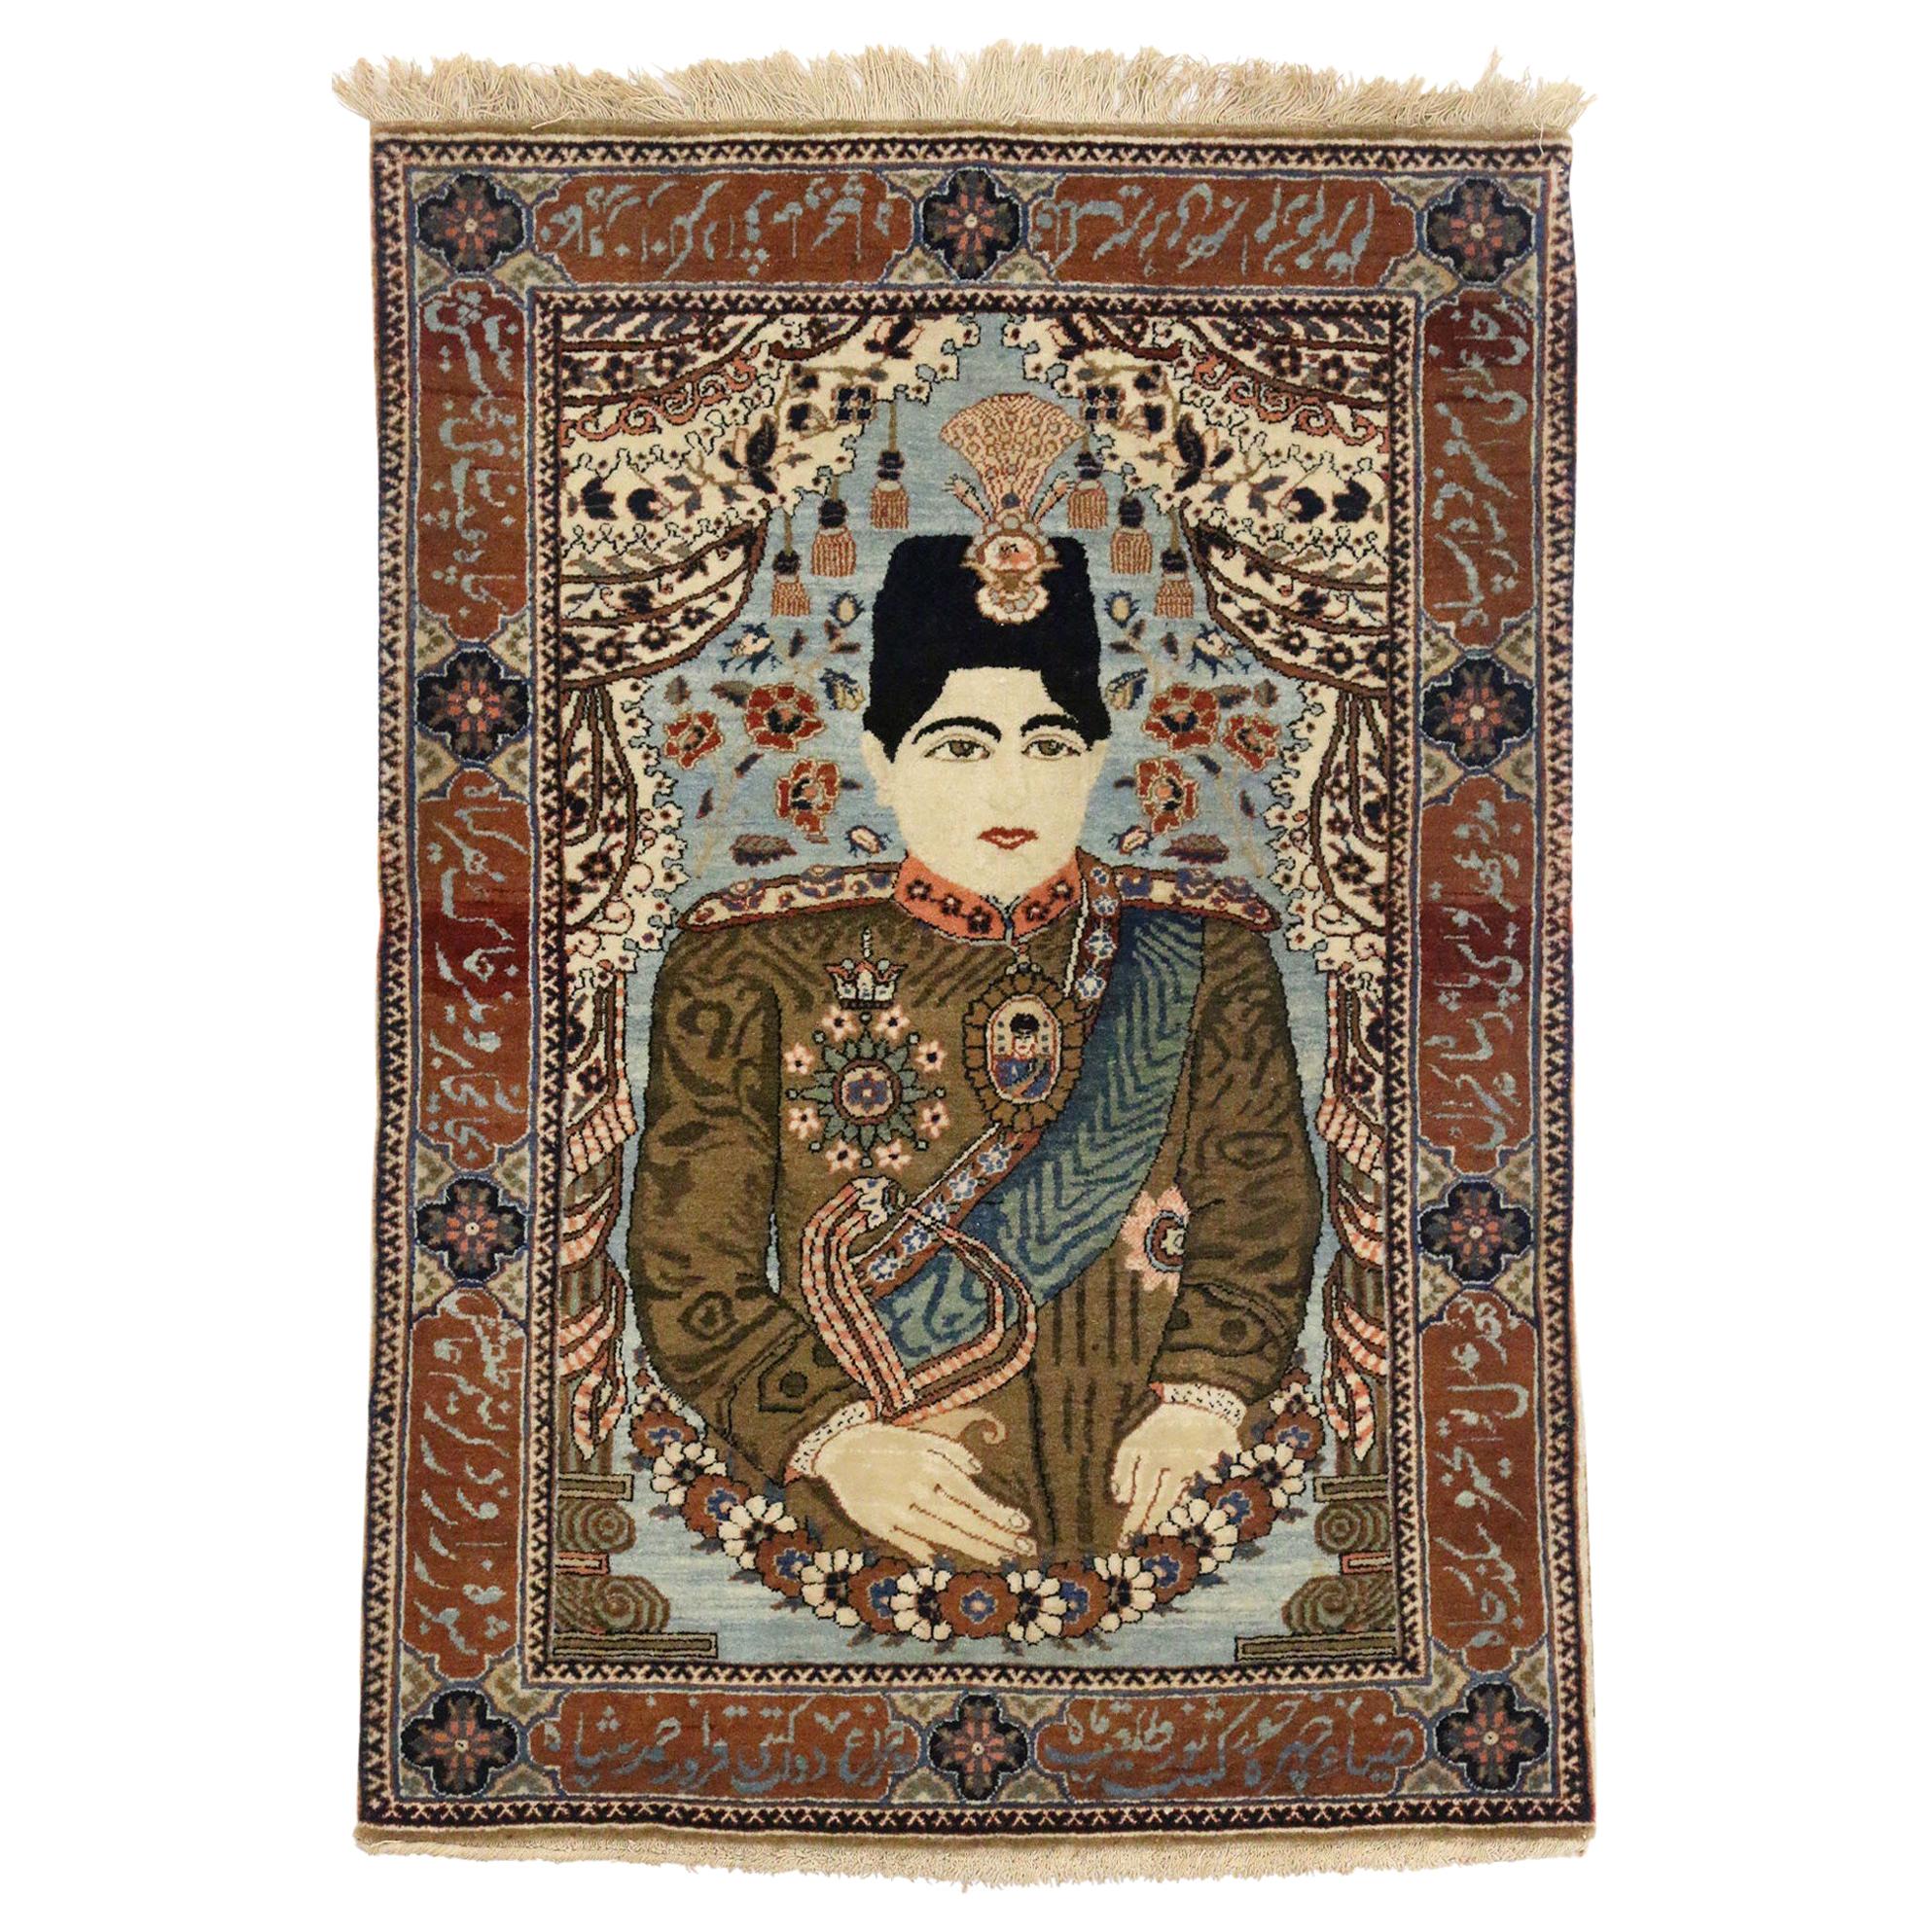 Antique Persian Mohtashem Kashan Pictorial Rug, King Ahmad Shah Qajar Tapestry